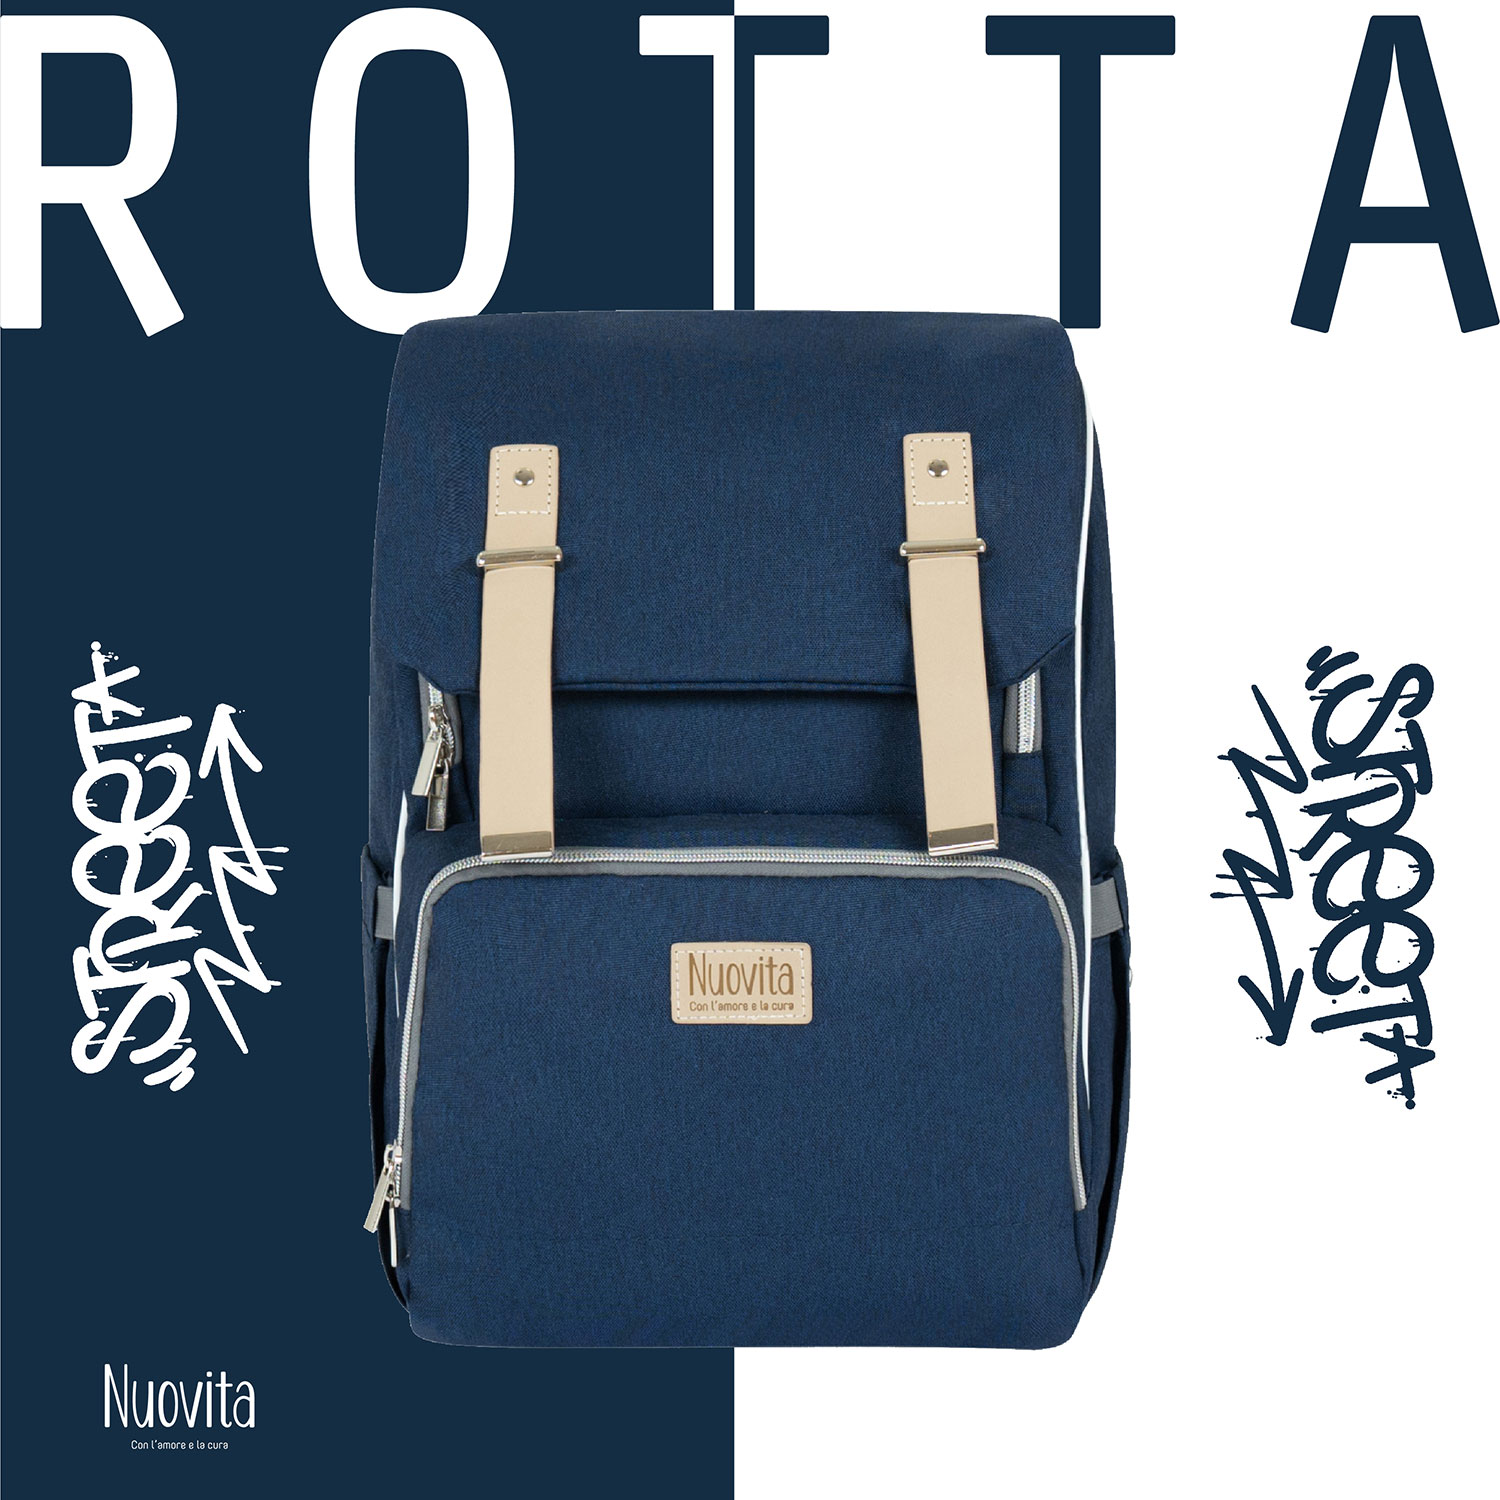 Рюкзак Nuovita CAPCAP rotta (Blu scuro/Темно-синий) nuovita рюкзак для мамы capcap classic